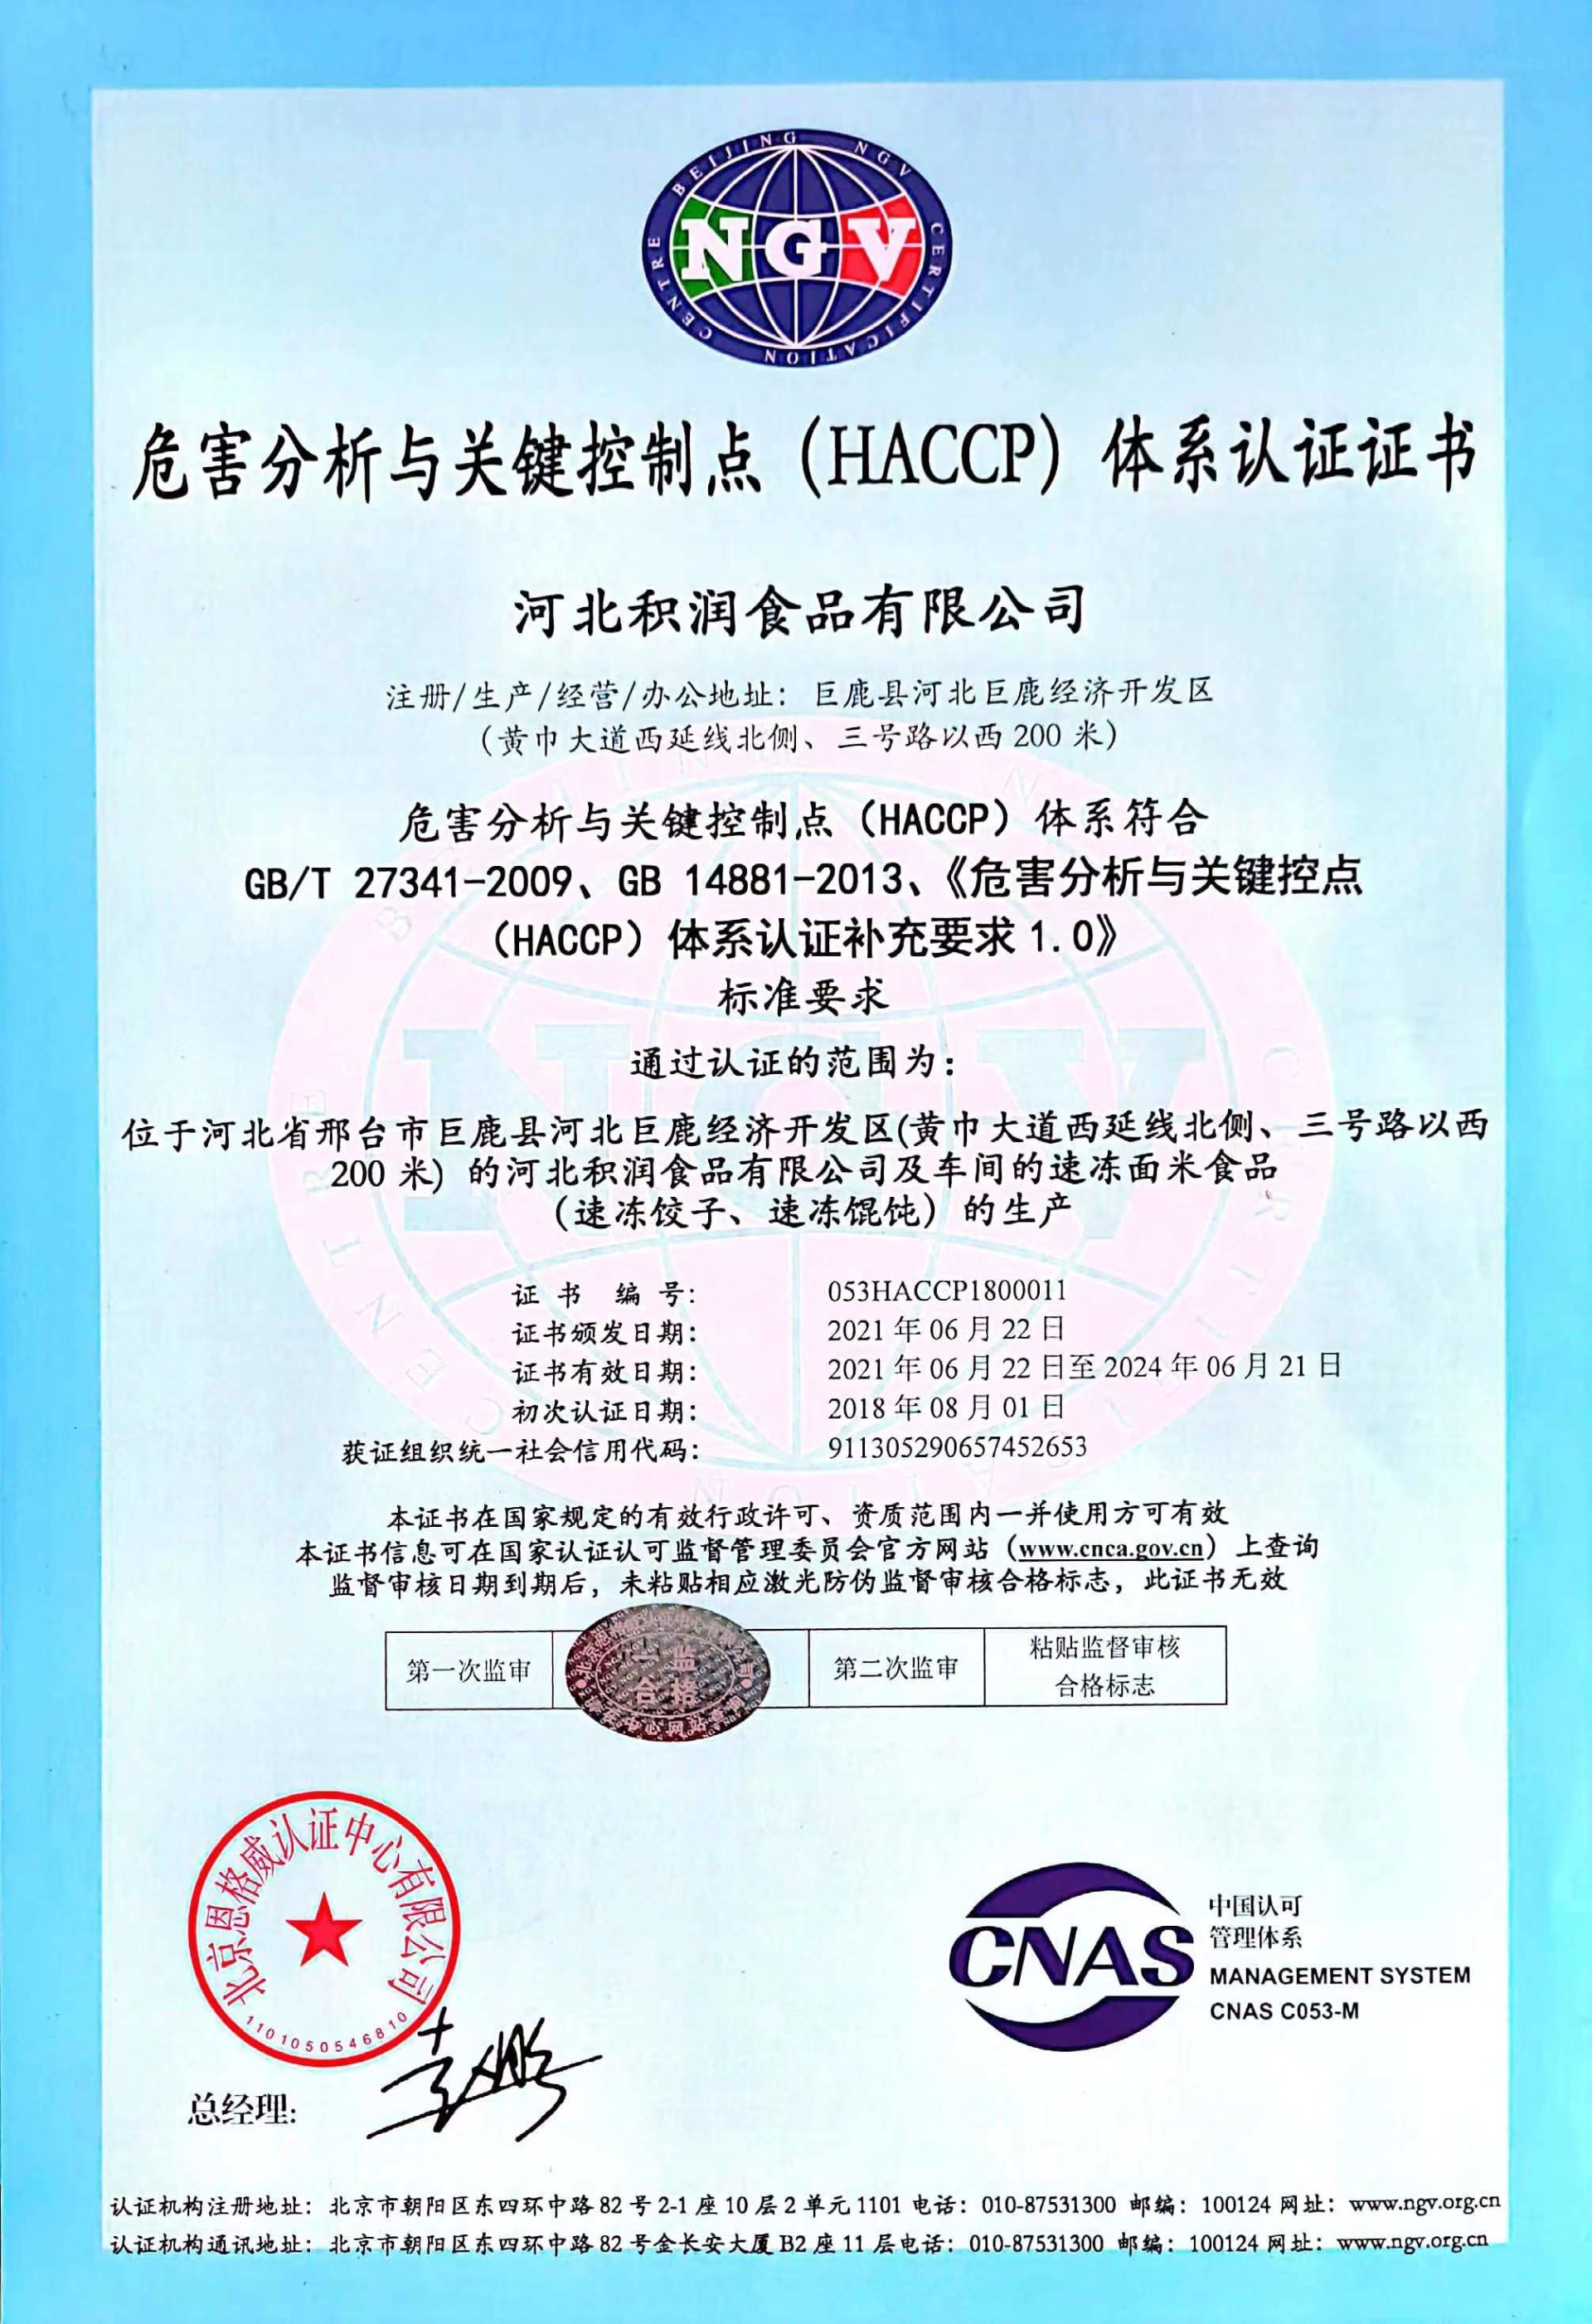 HACCP管理体系认证证书